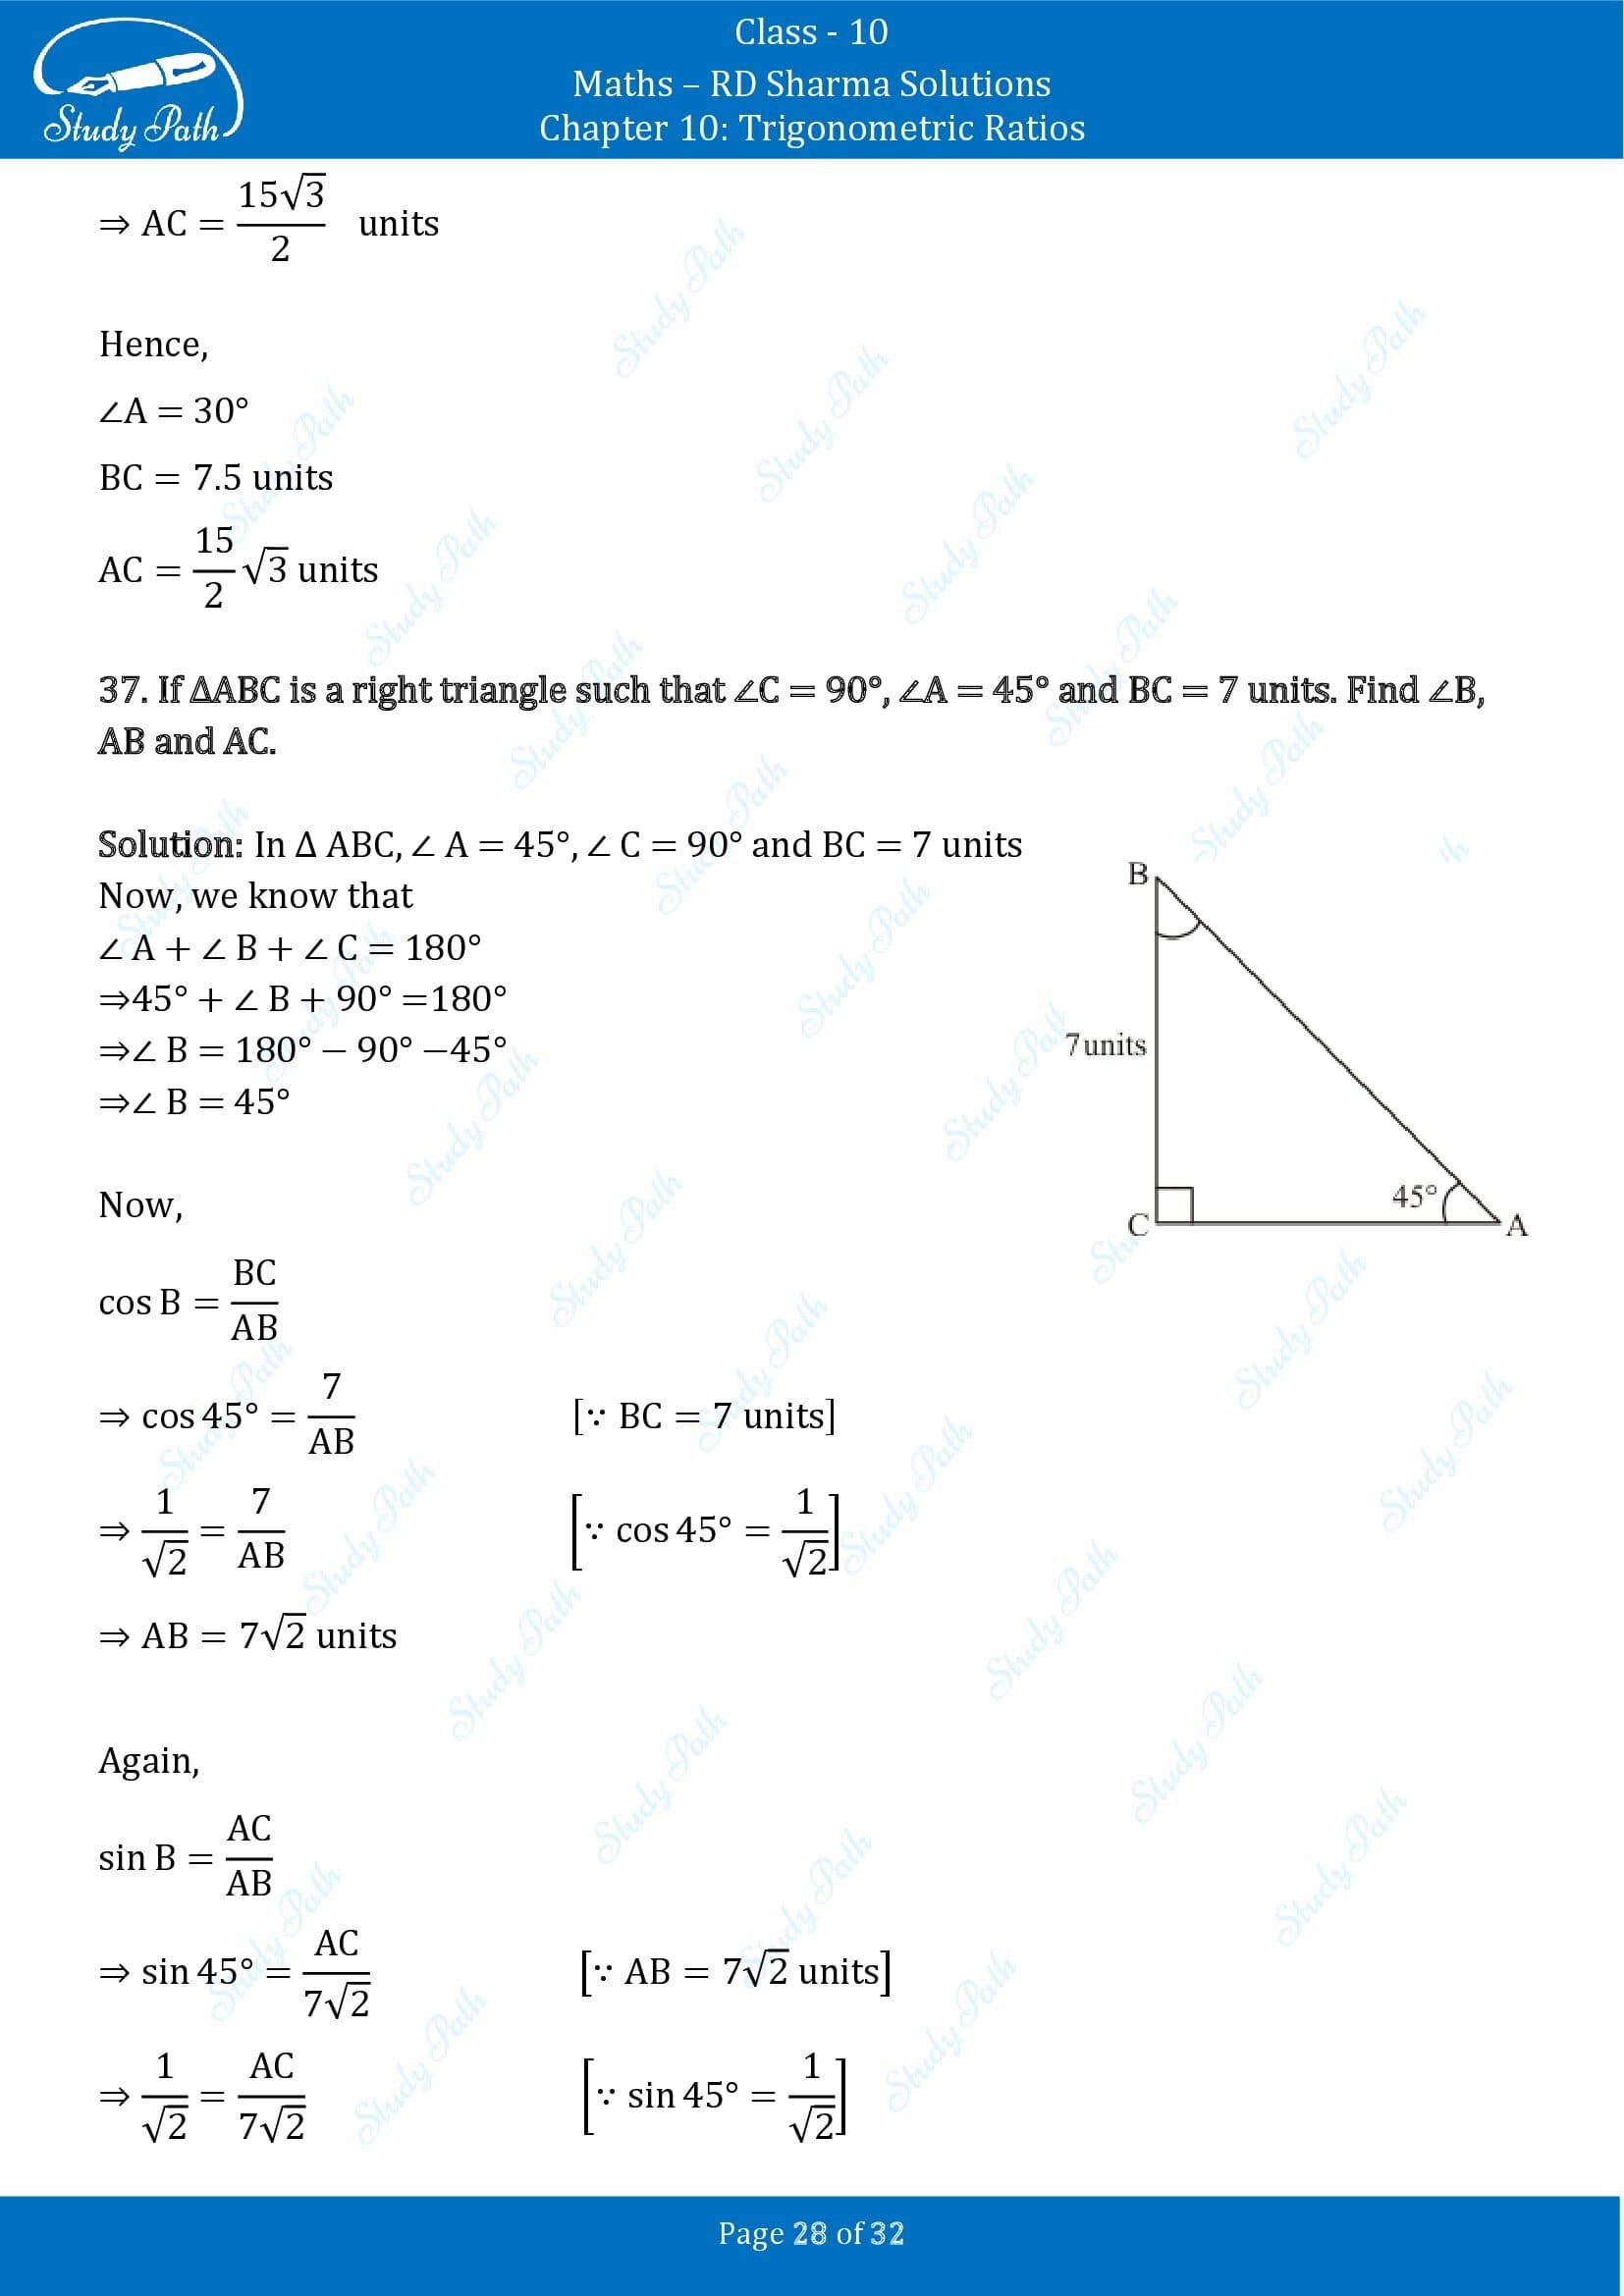 RD Sharma Solutions Class 10 Chapter 10 Trigonometric Ratios Exercise 10.2 00028